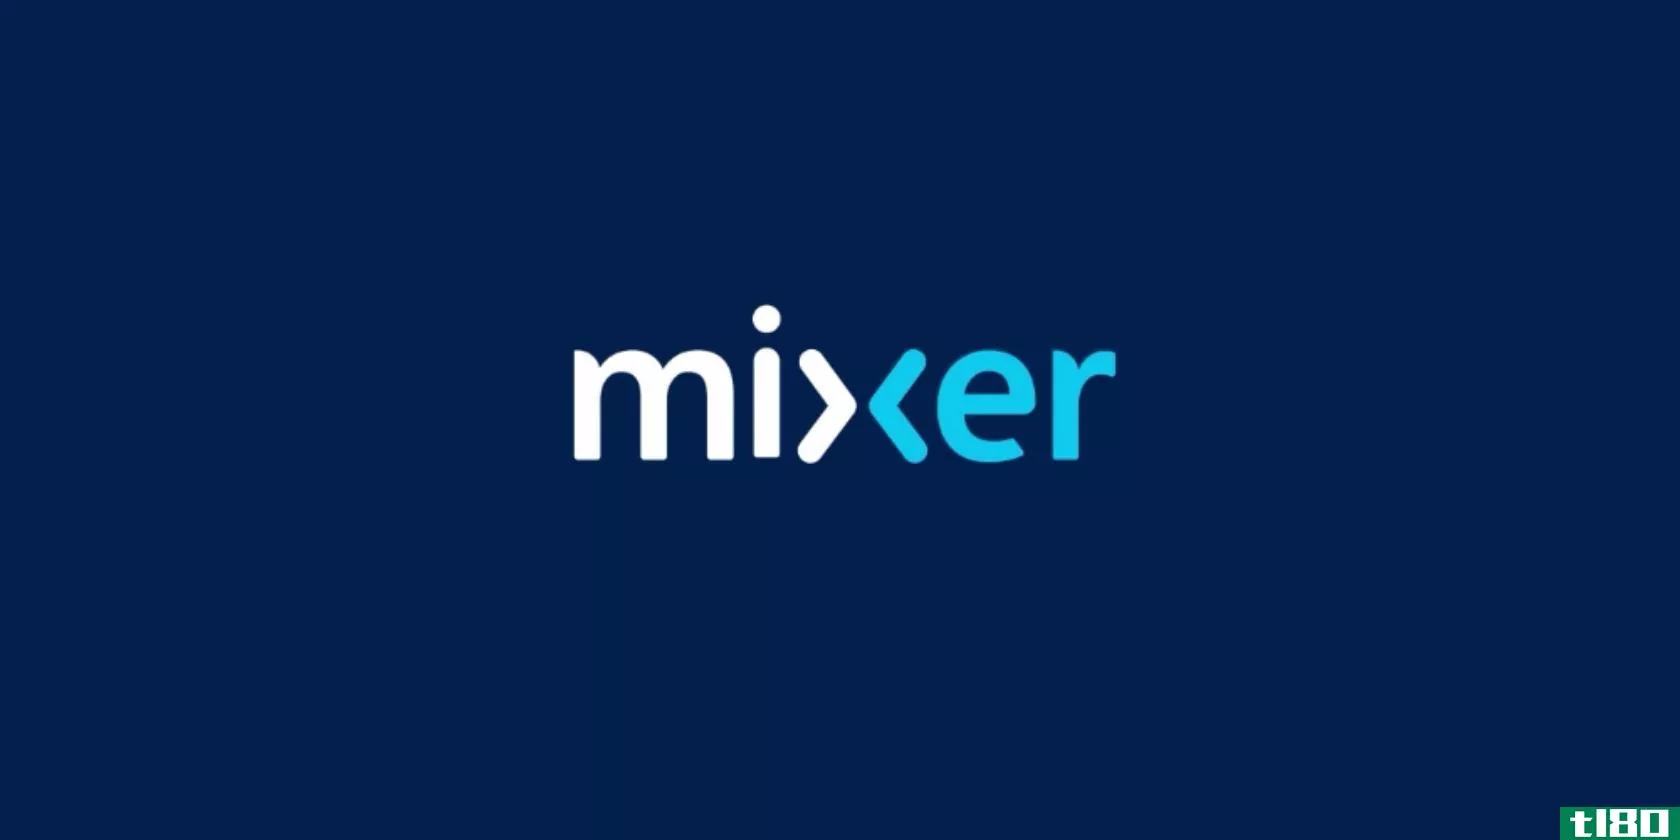 microsoft-mixer-logo-blue